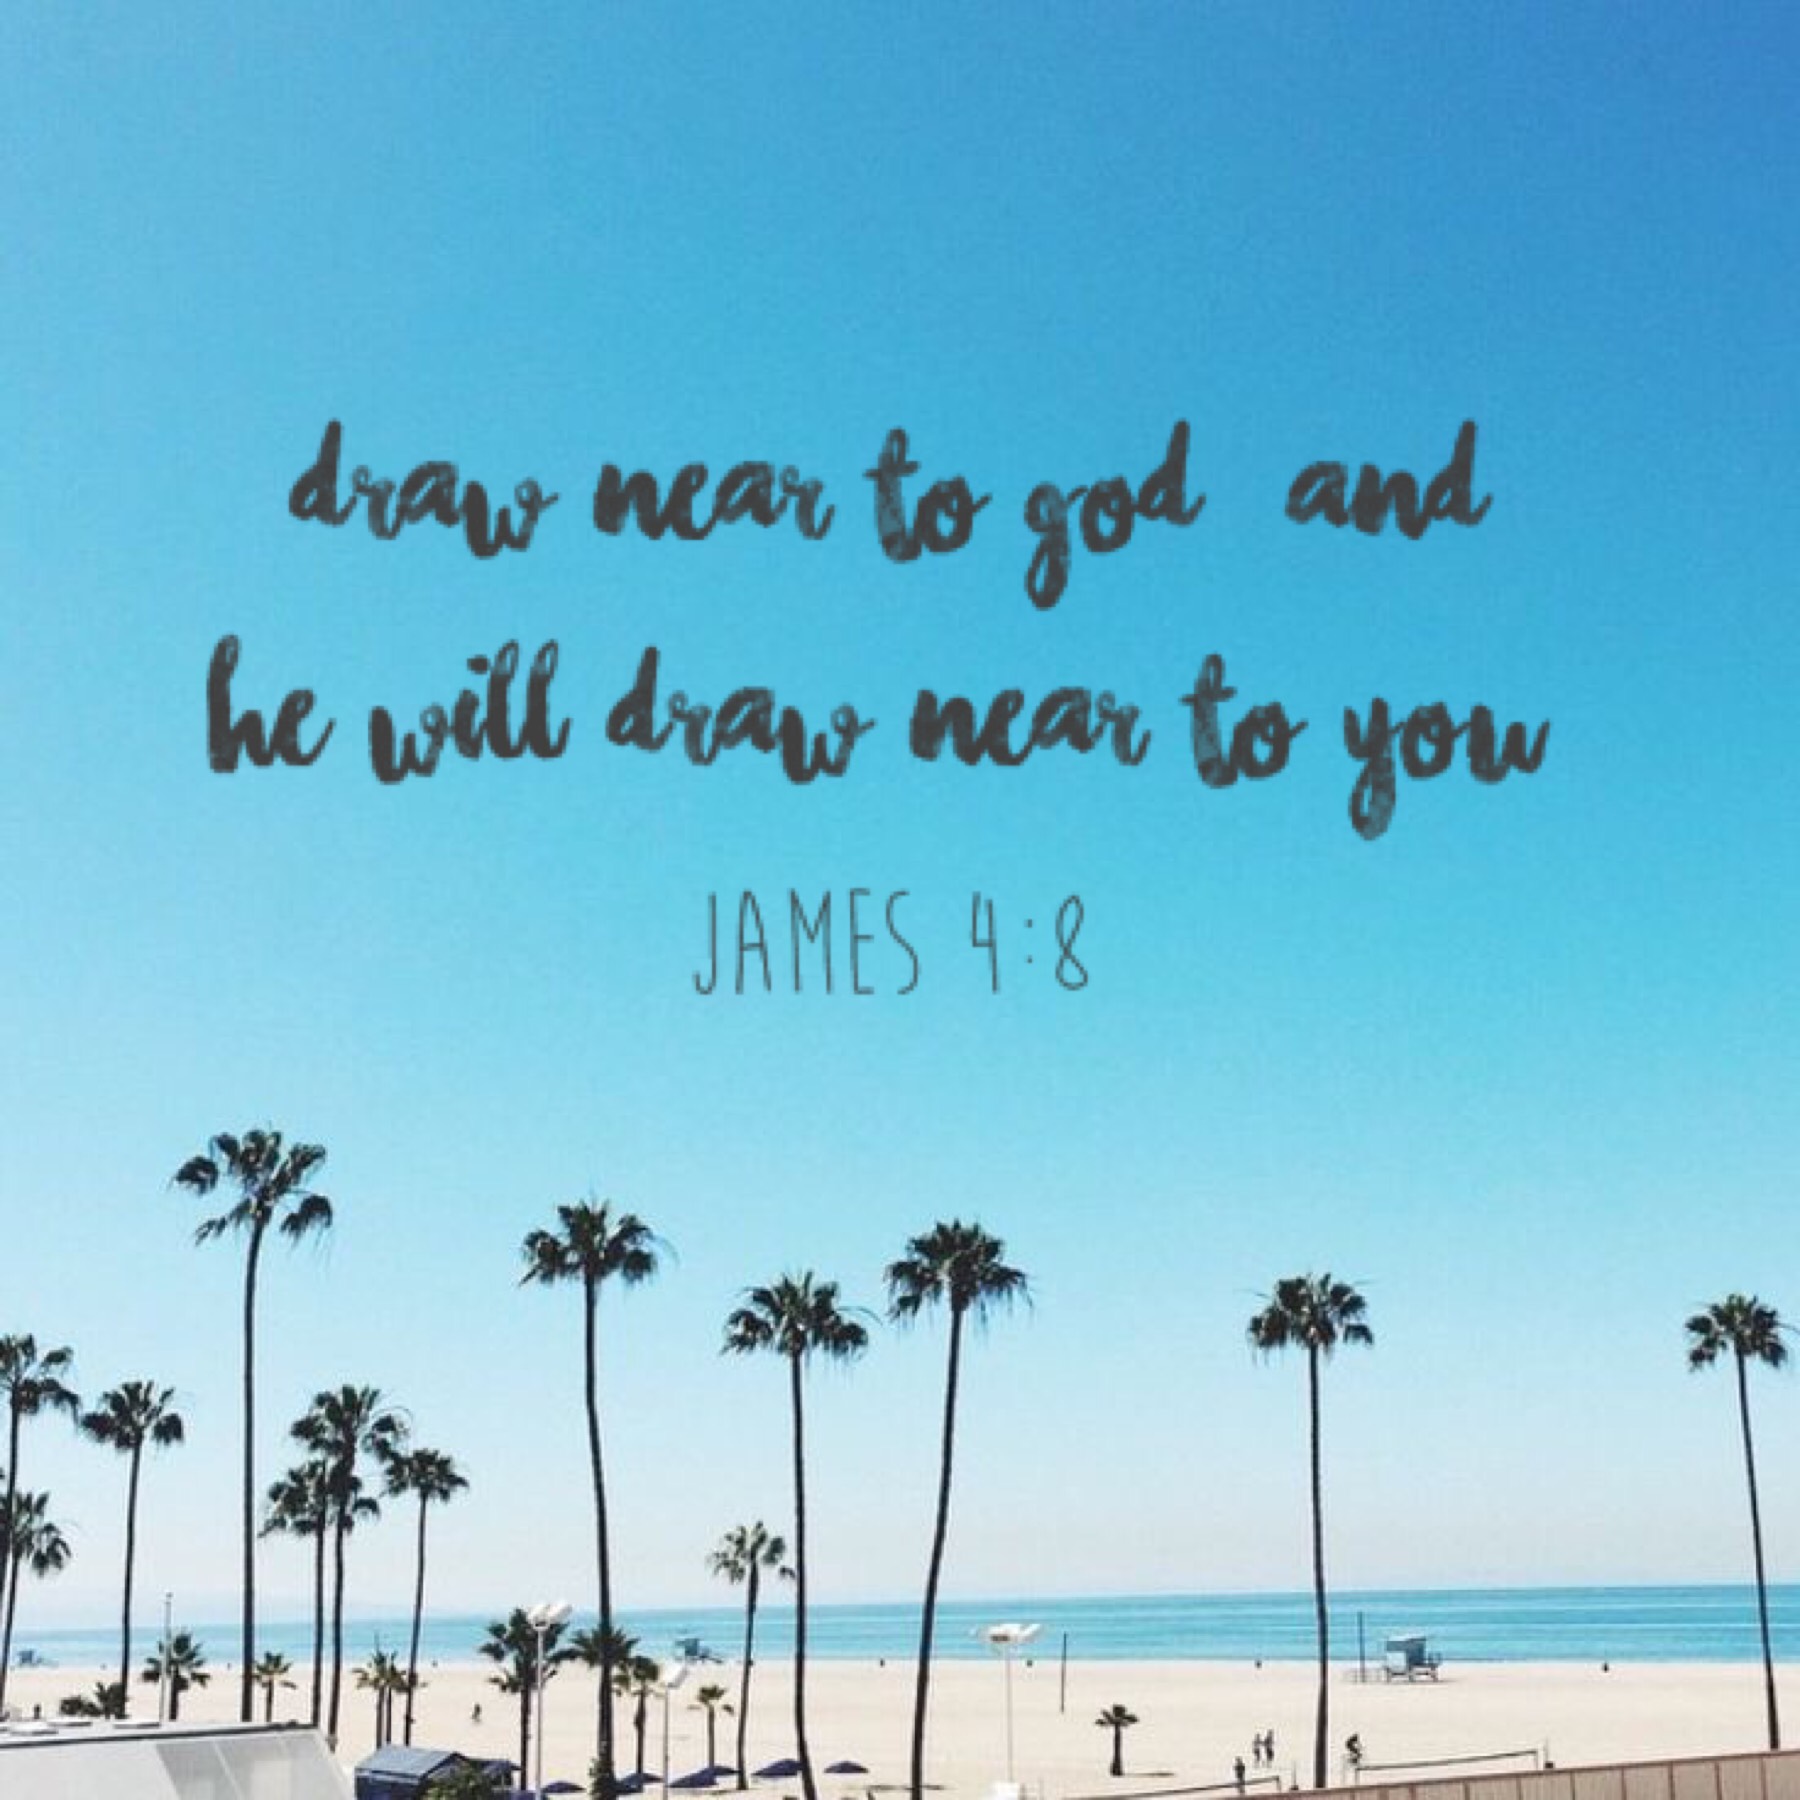 💍
James 4:8